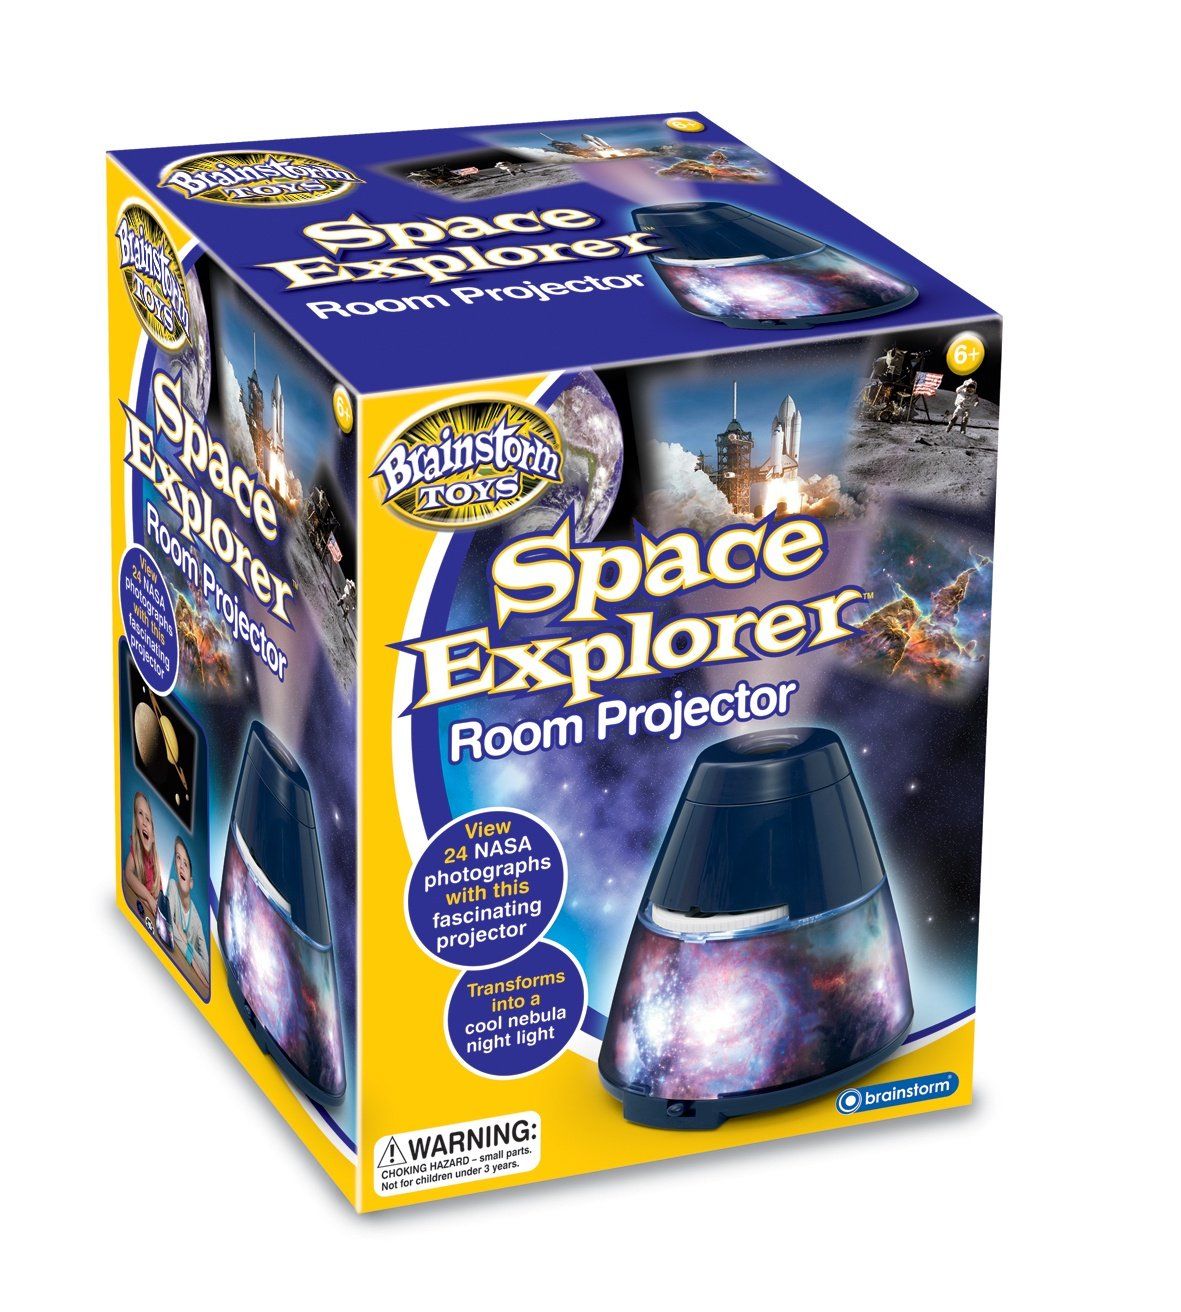 Space Explorer Room Projector Toys Brainstorm 